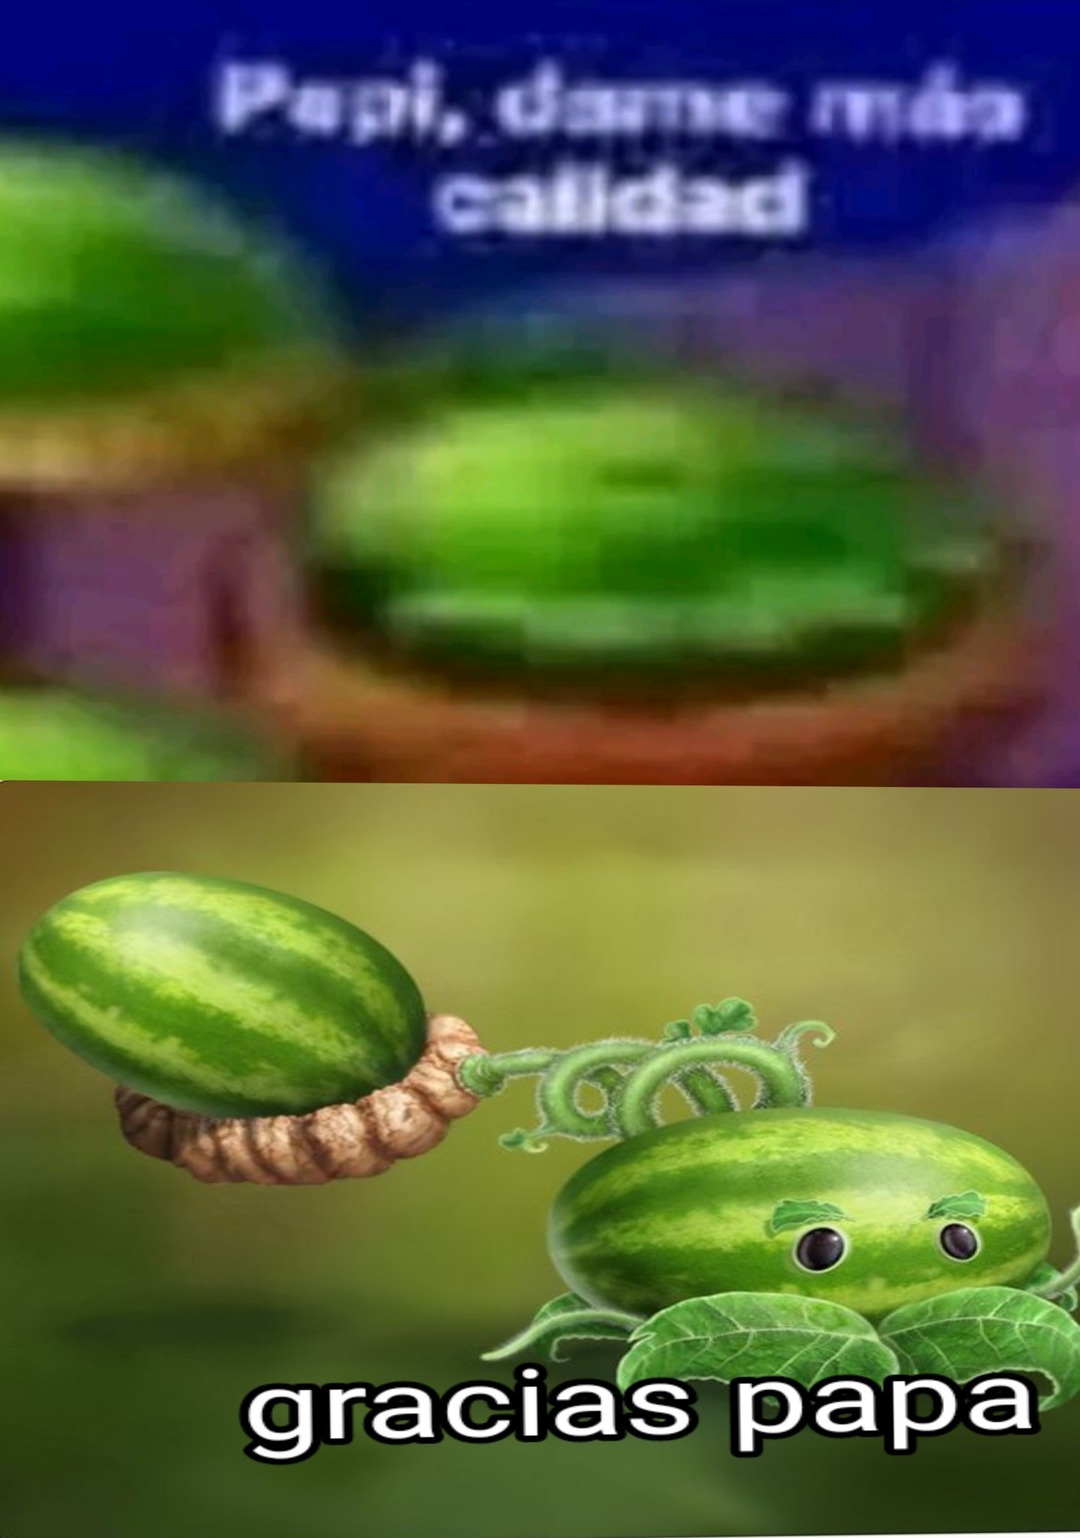 Las melonpultas merecen respeto - meme